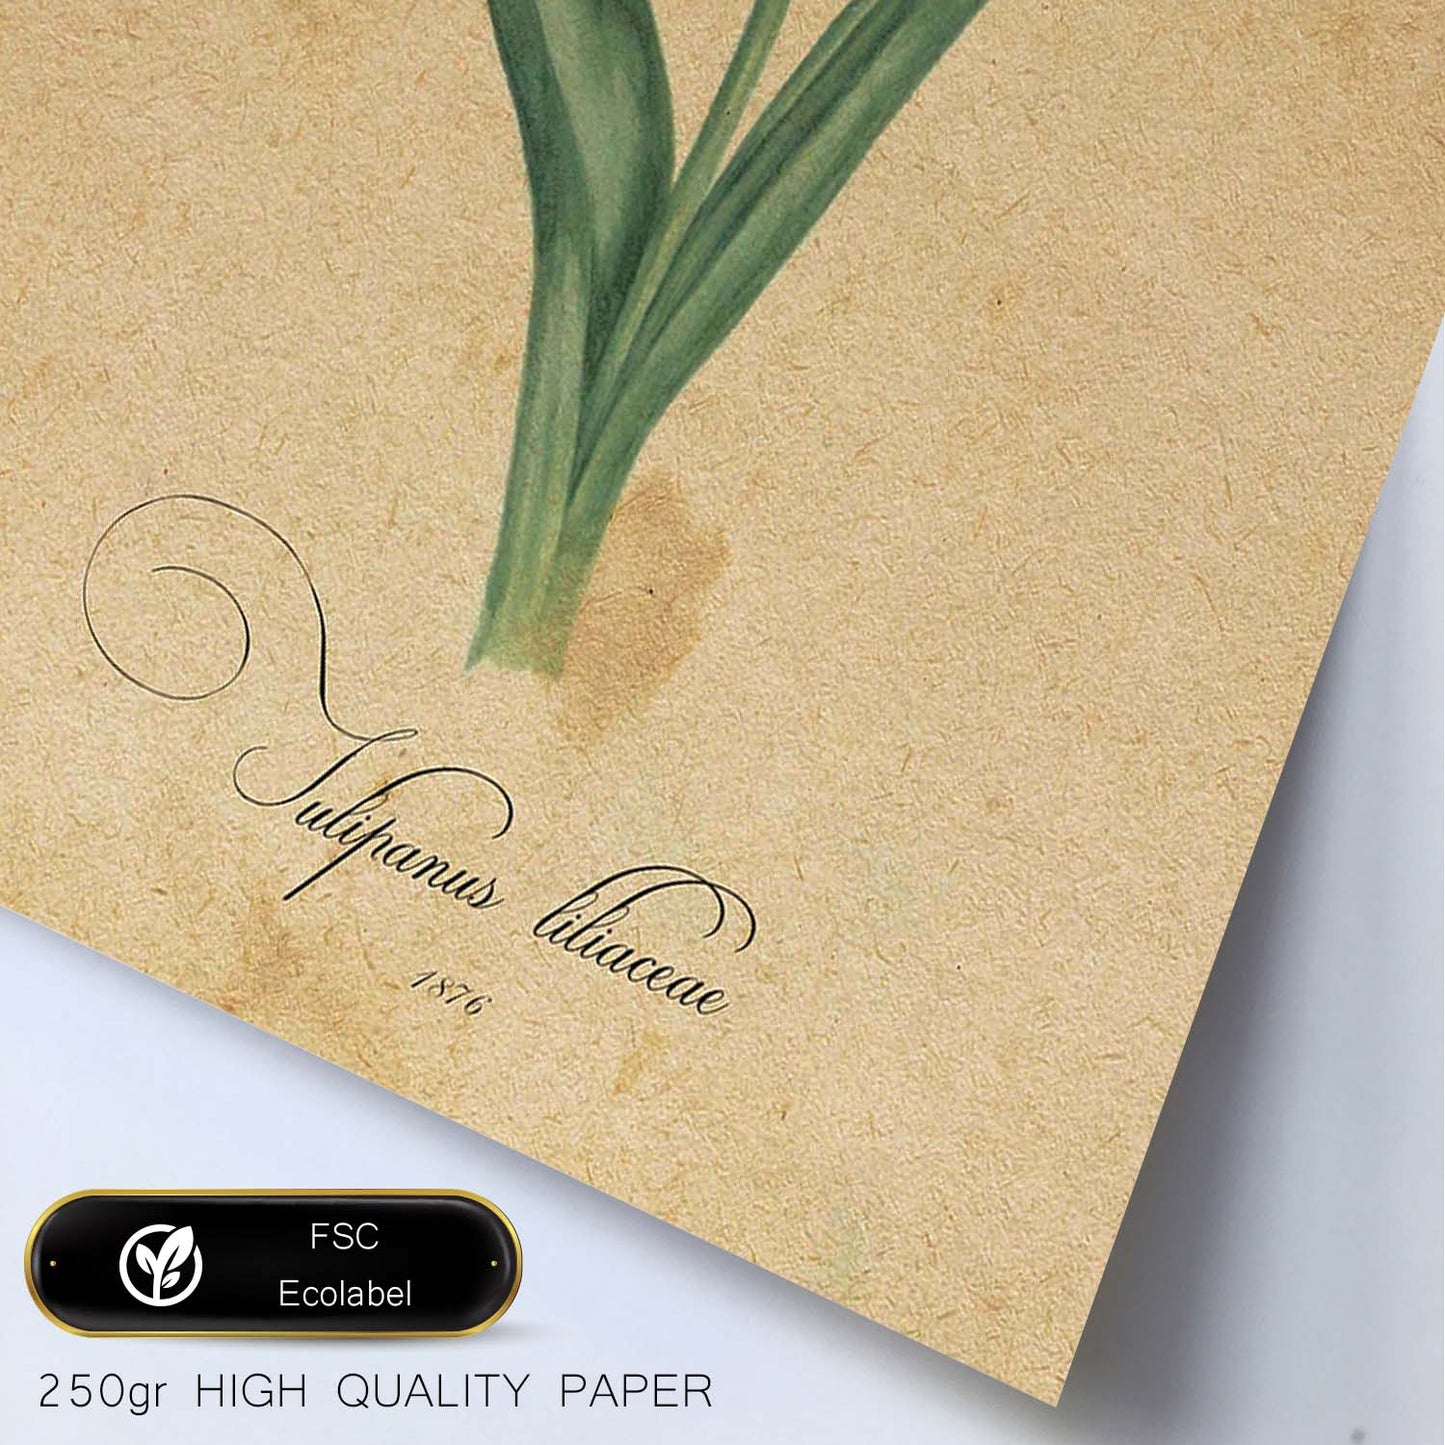 Poster de flores vintage. Lámina Liliaceae tulip con diseño vintage.-Artwork-Nacnic-Nacnic Estudio SL